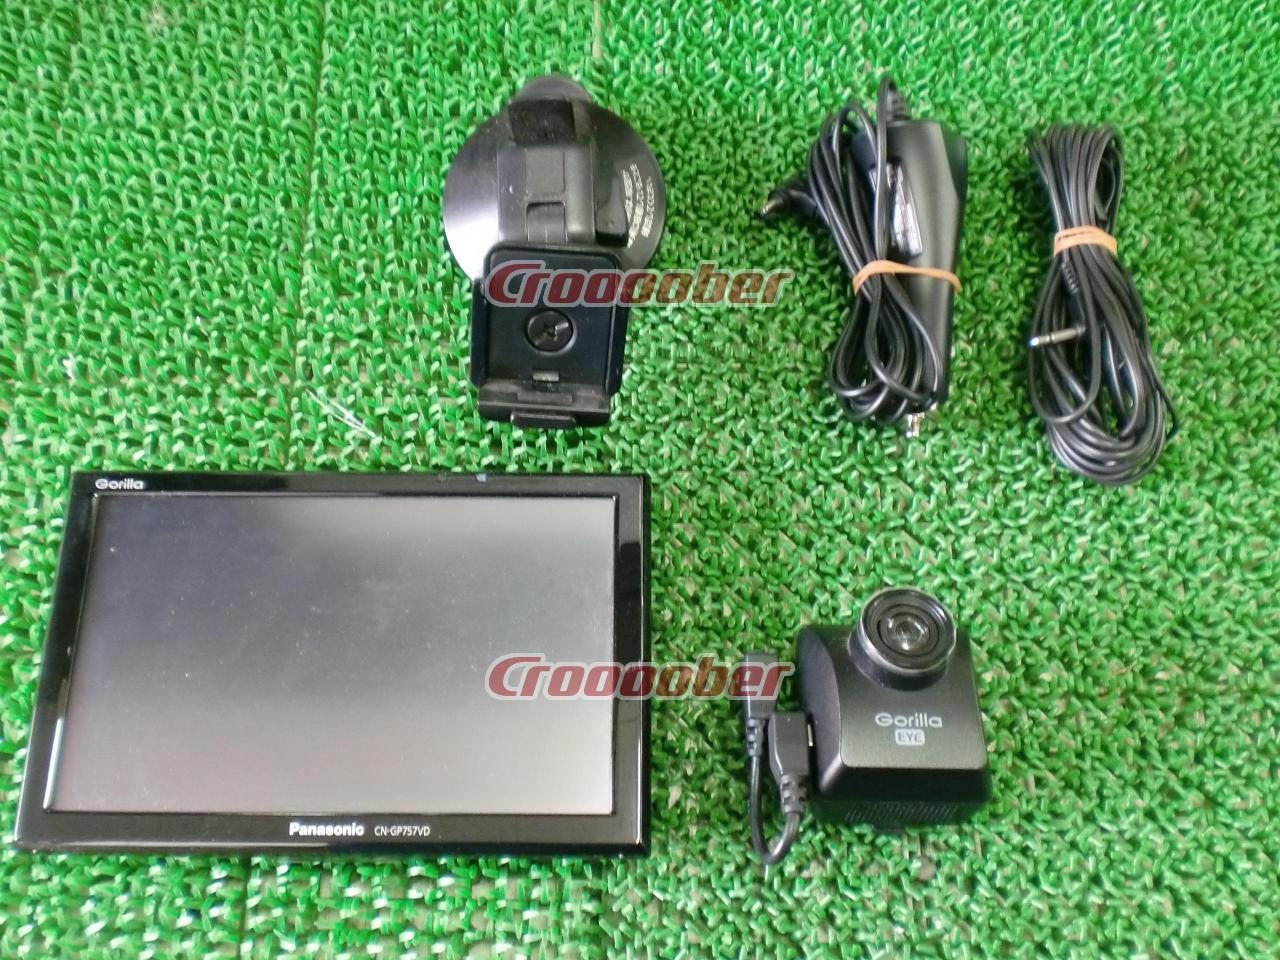 Panasonic CN-GP757VD | Portable Navigation(digital) | Croooober